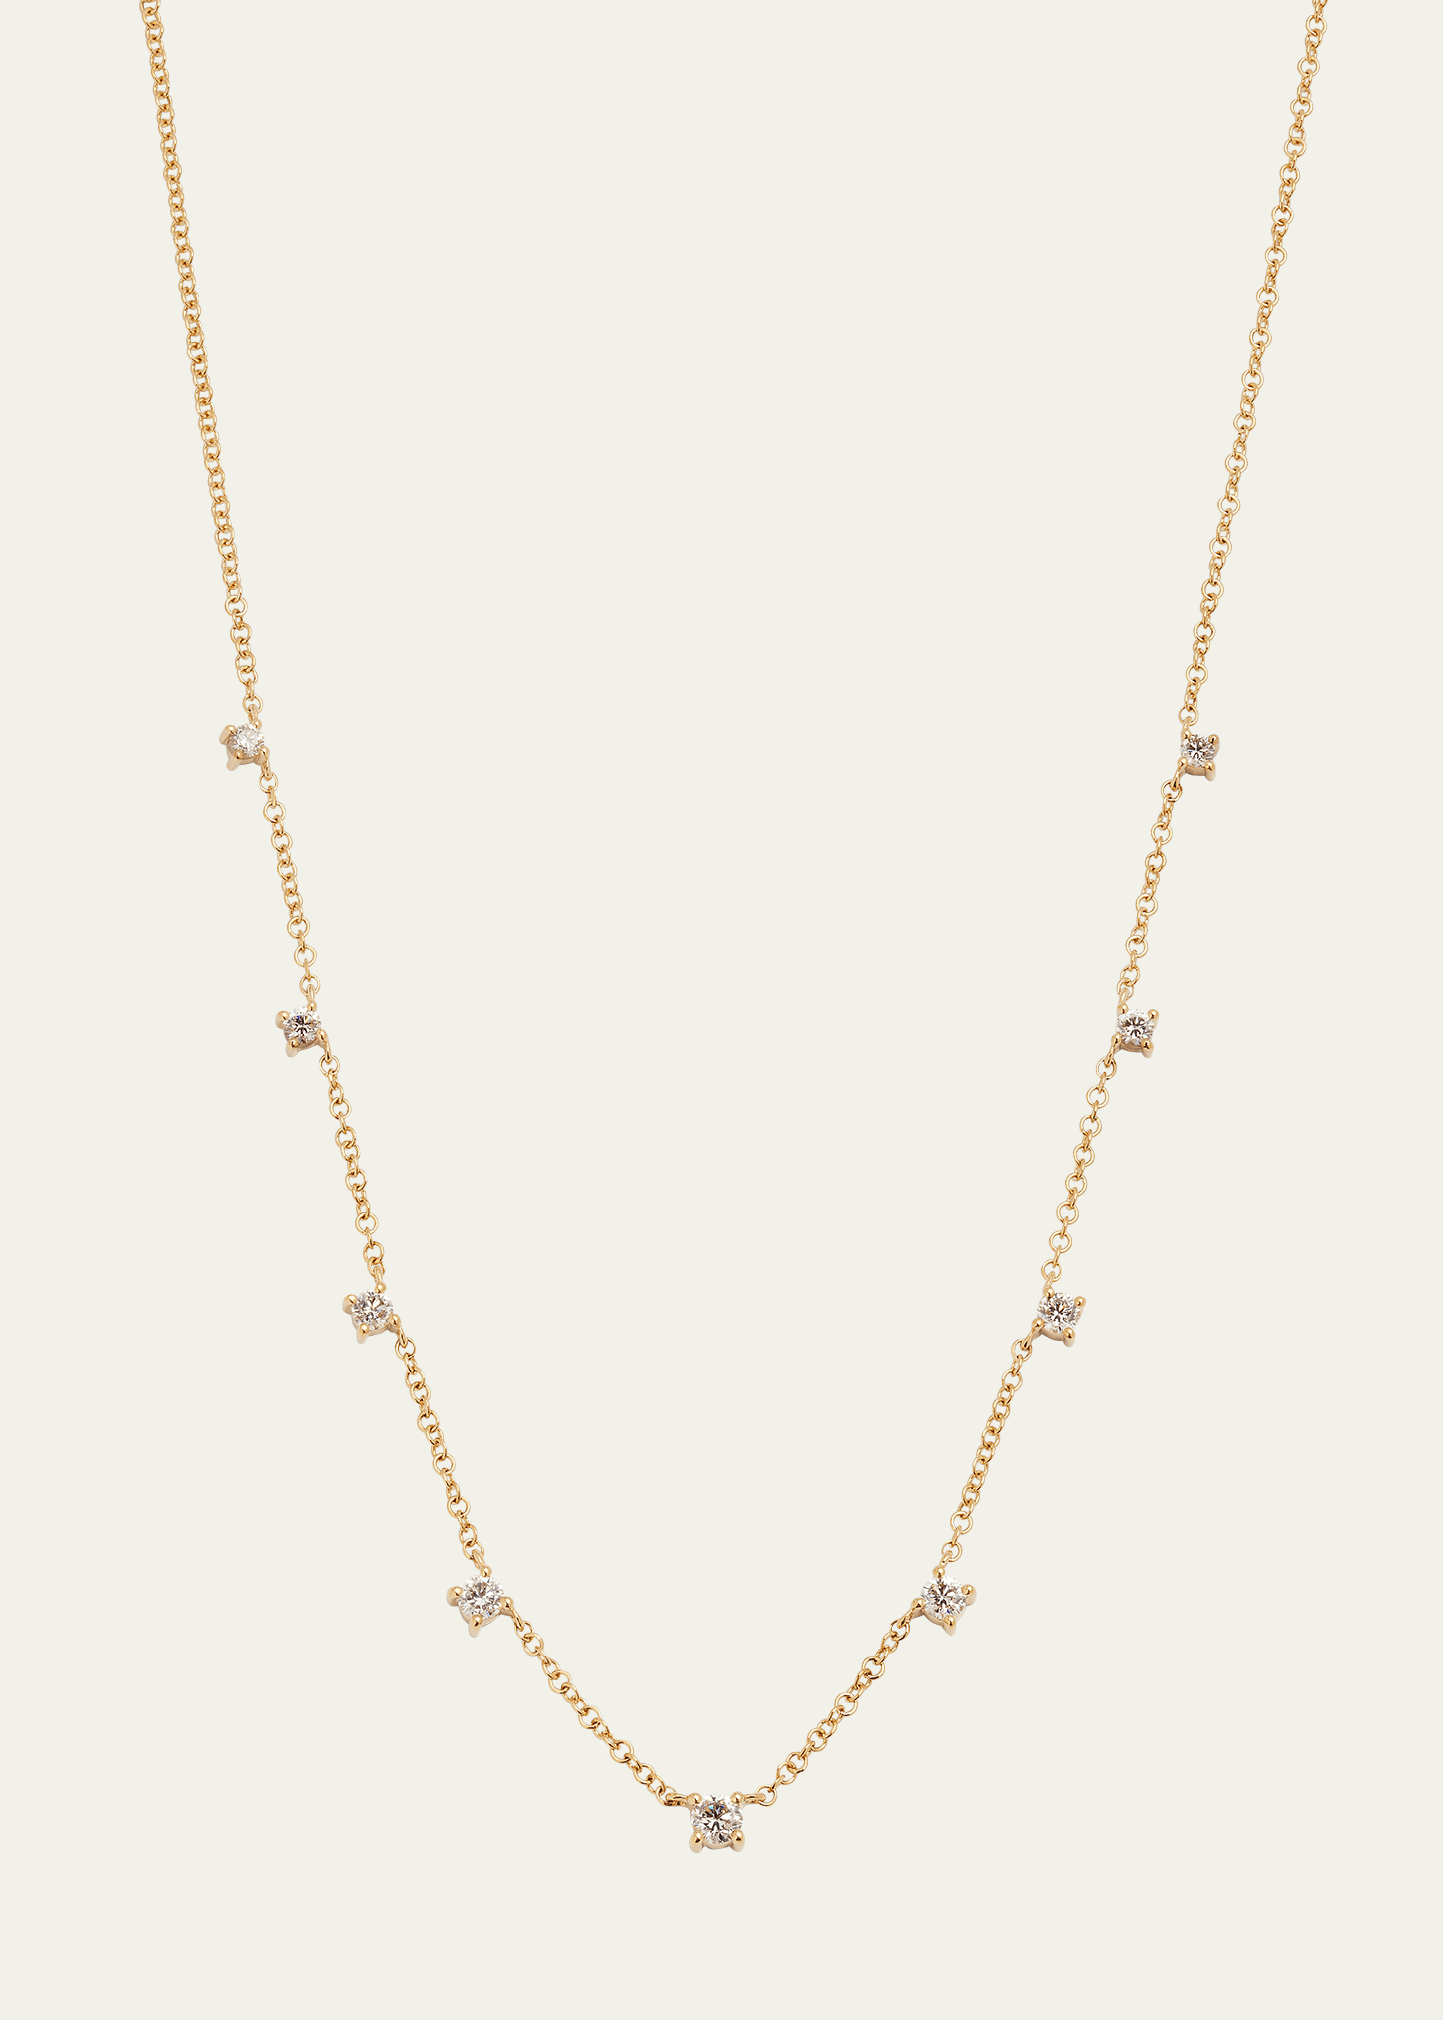 14K Yellow Gold Diamond Station Necklace, 18"L